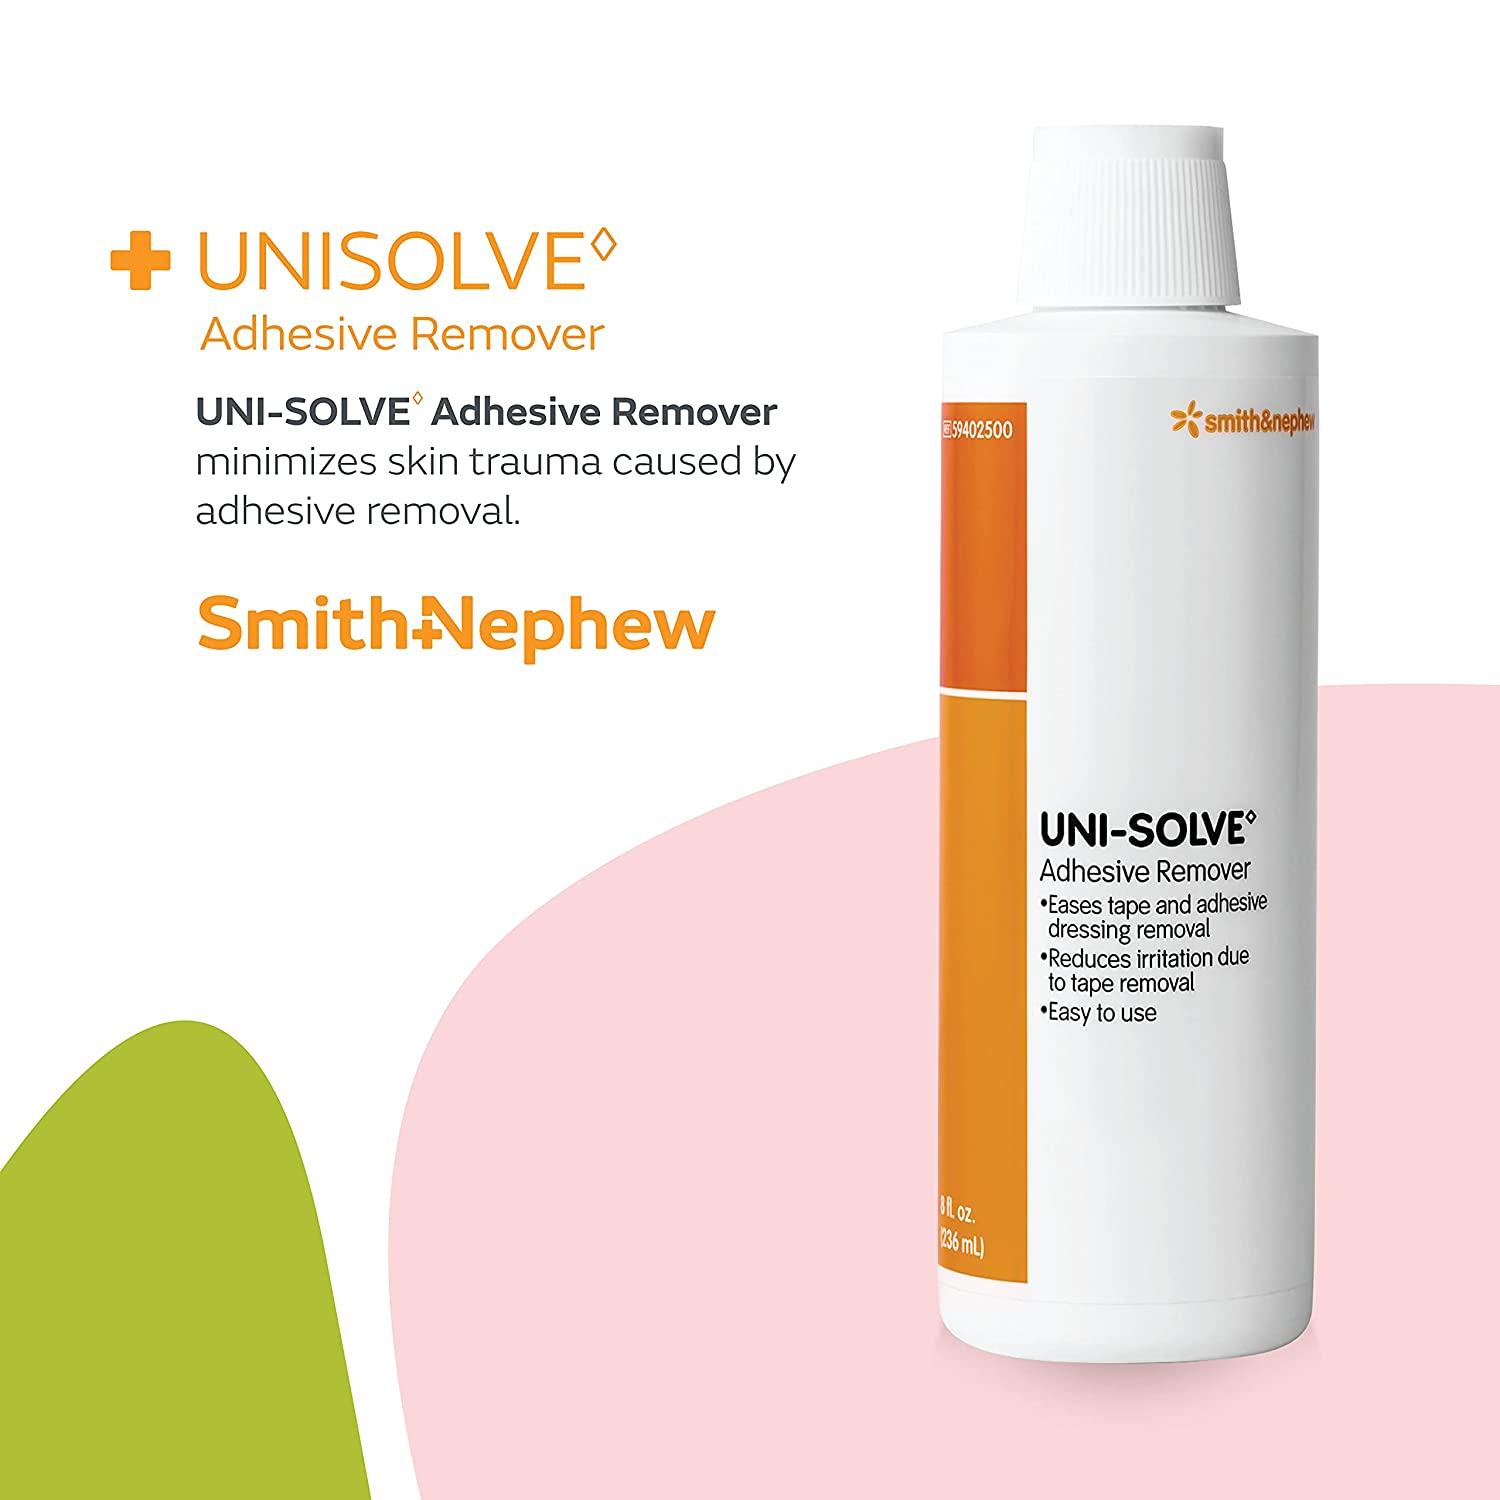 UNI-SOLVE Adhesive Remover